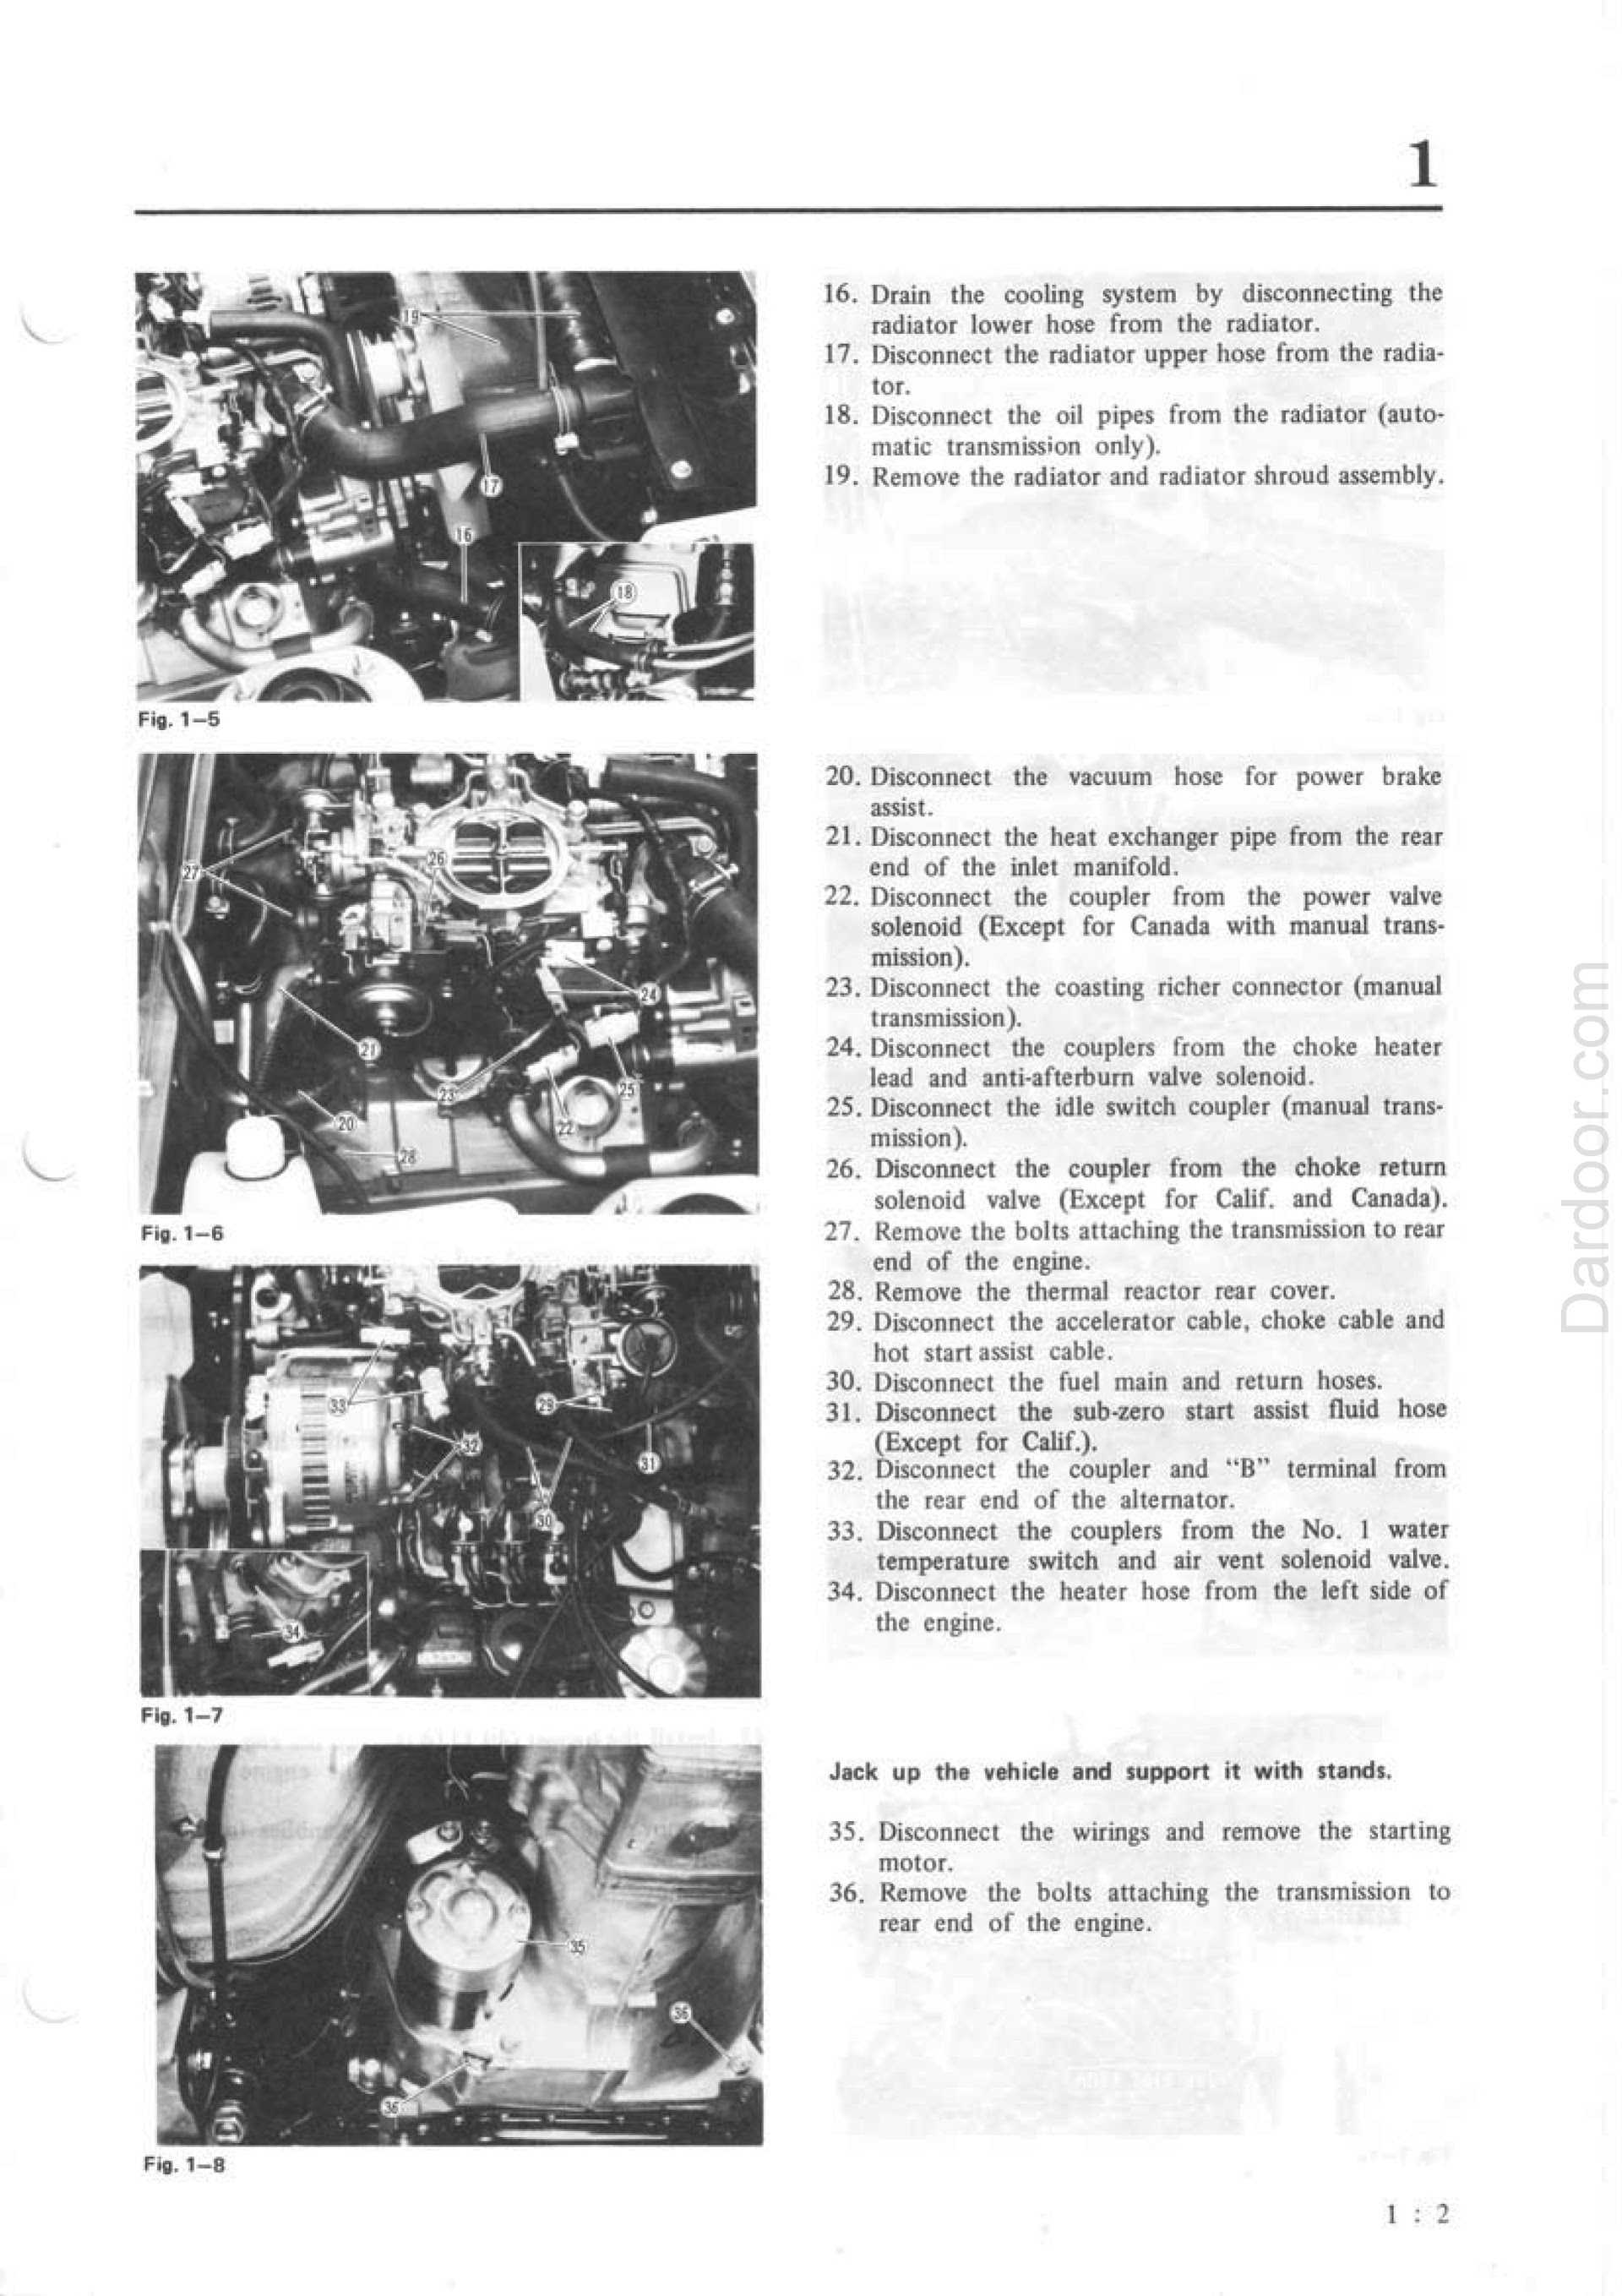 1980 Mazda RX7 service manual pdf